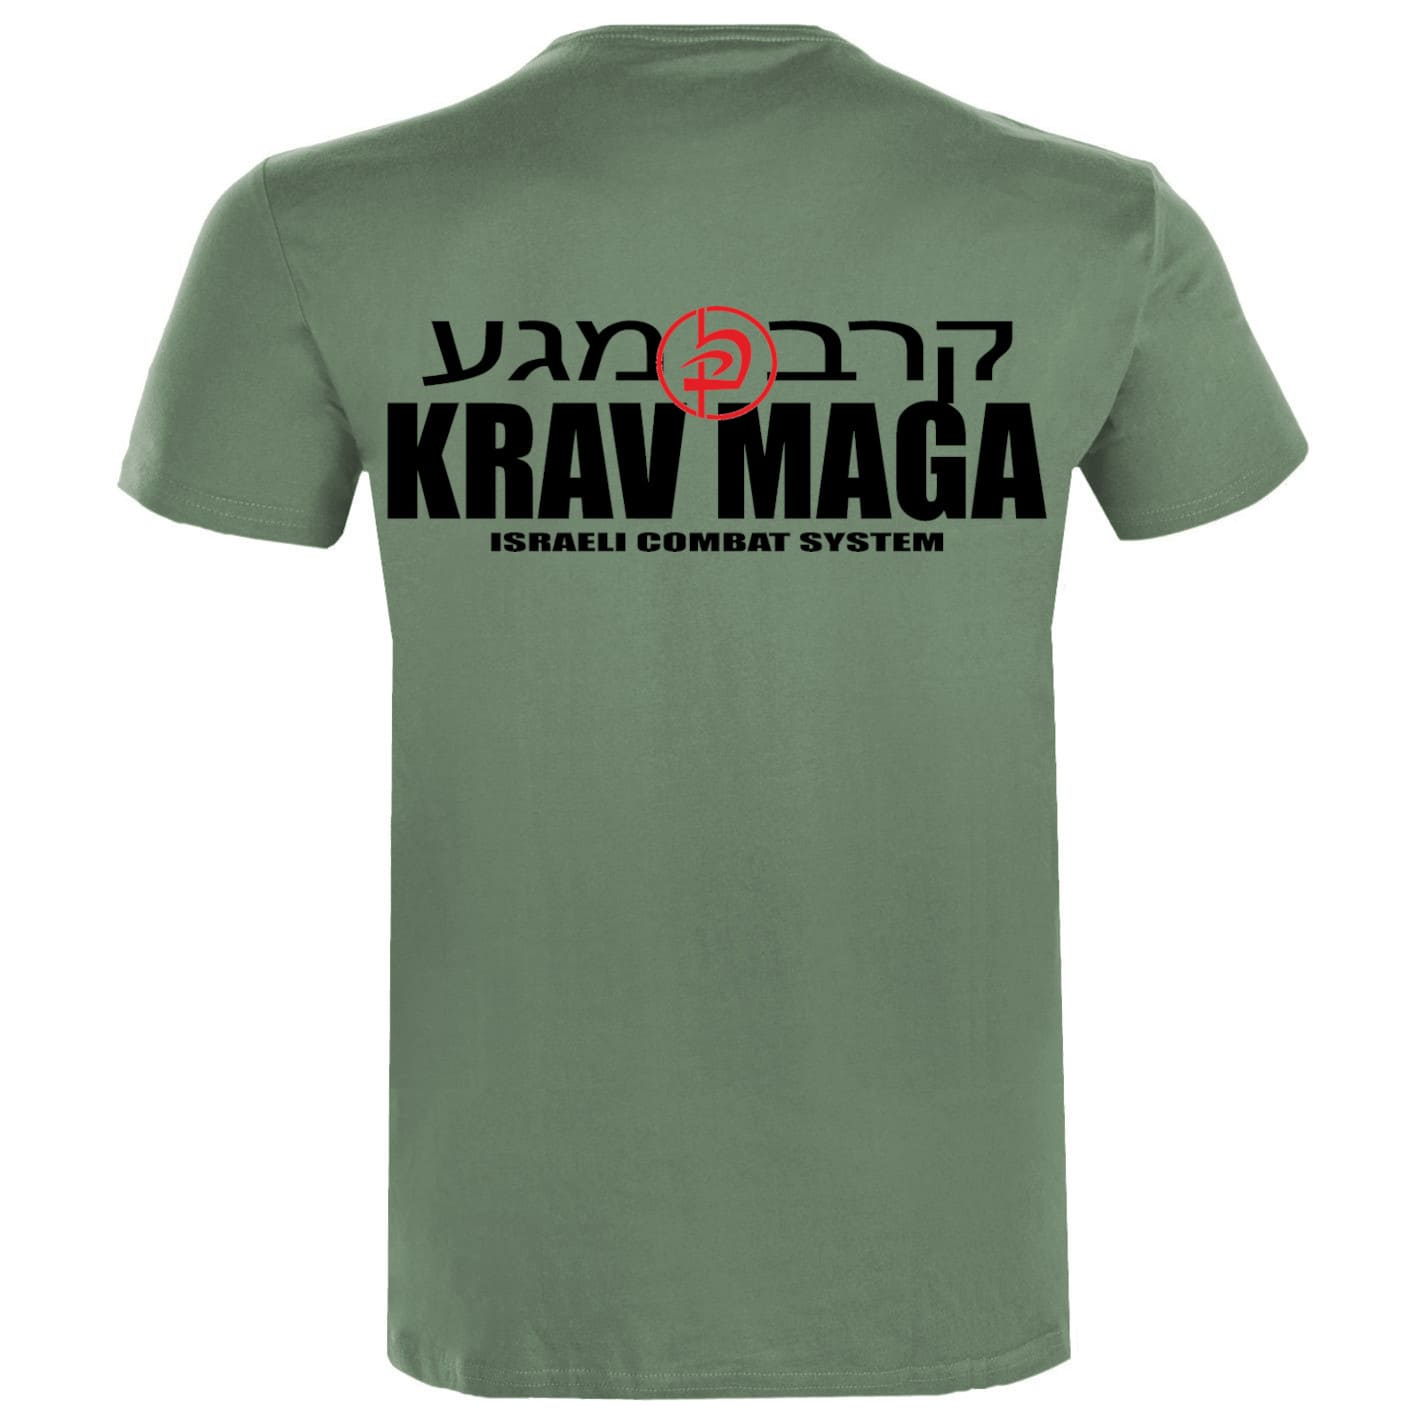 Dynamix Athletics T-Shirt Krav Maga Combat - Military